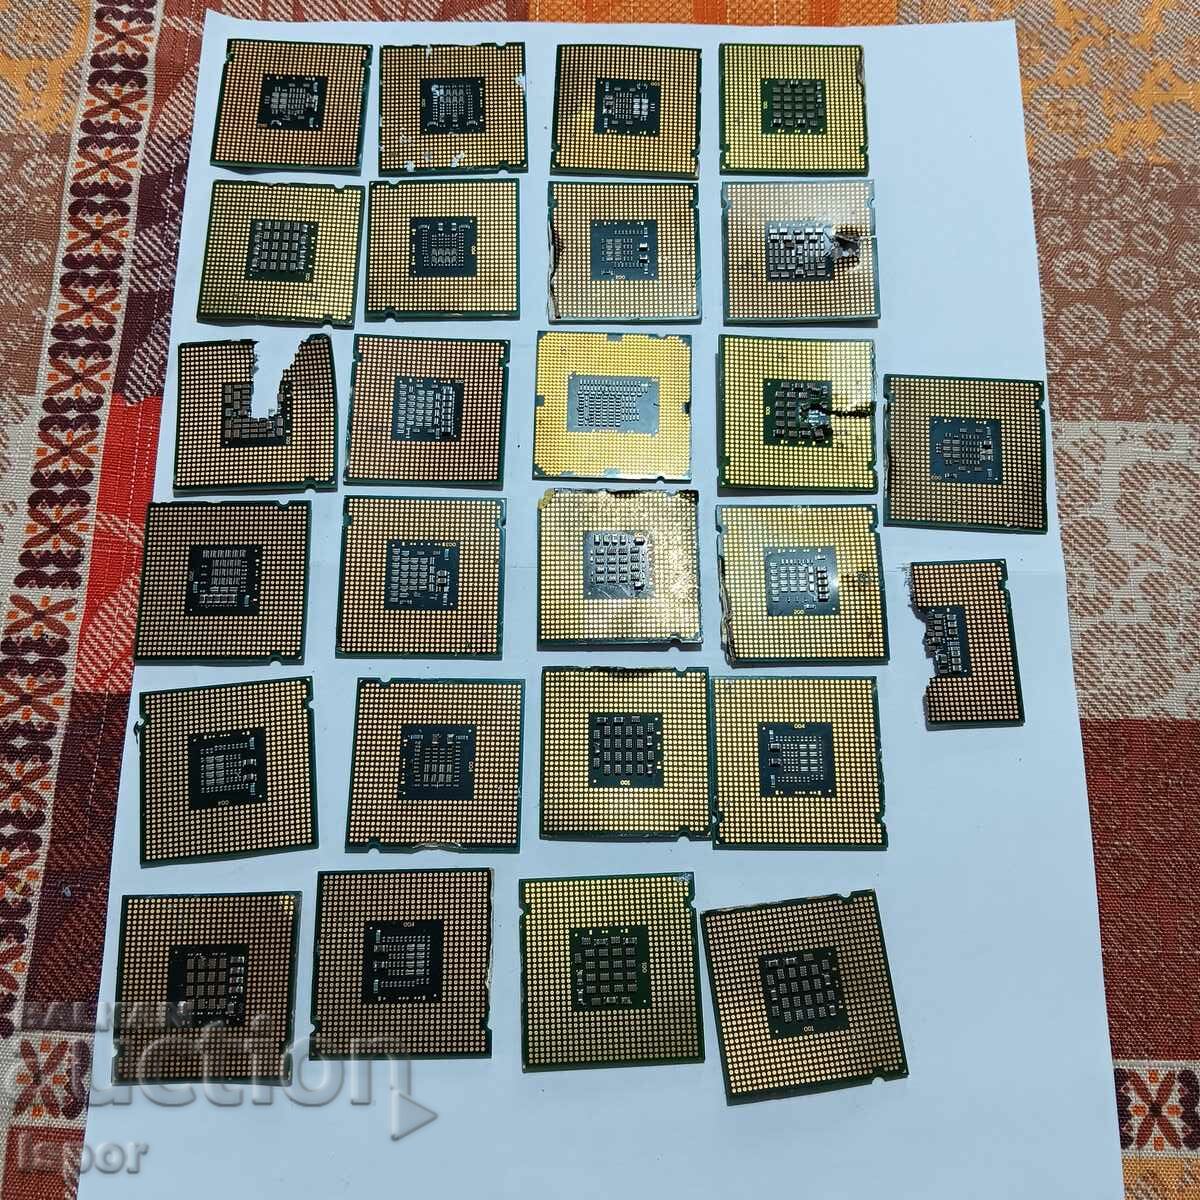 Gold-plated processors 25pcs //